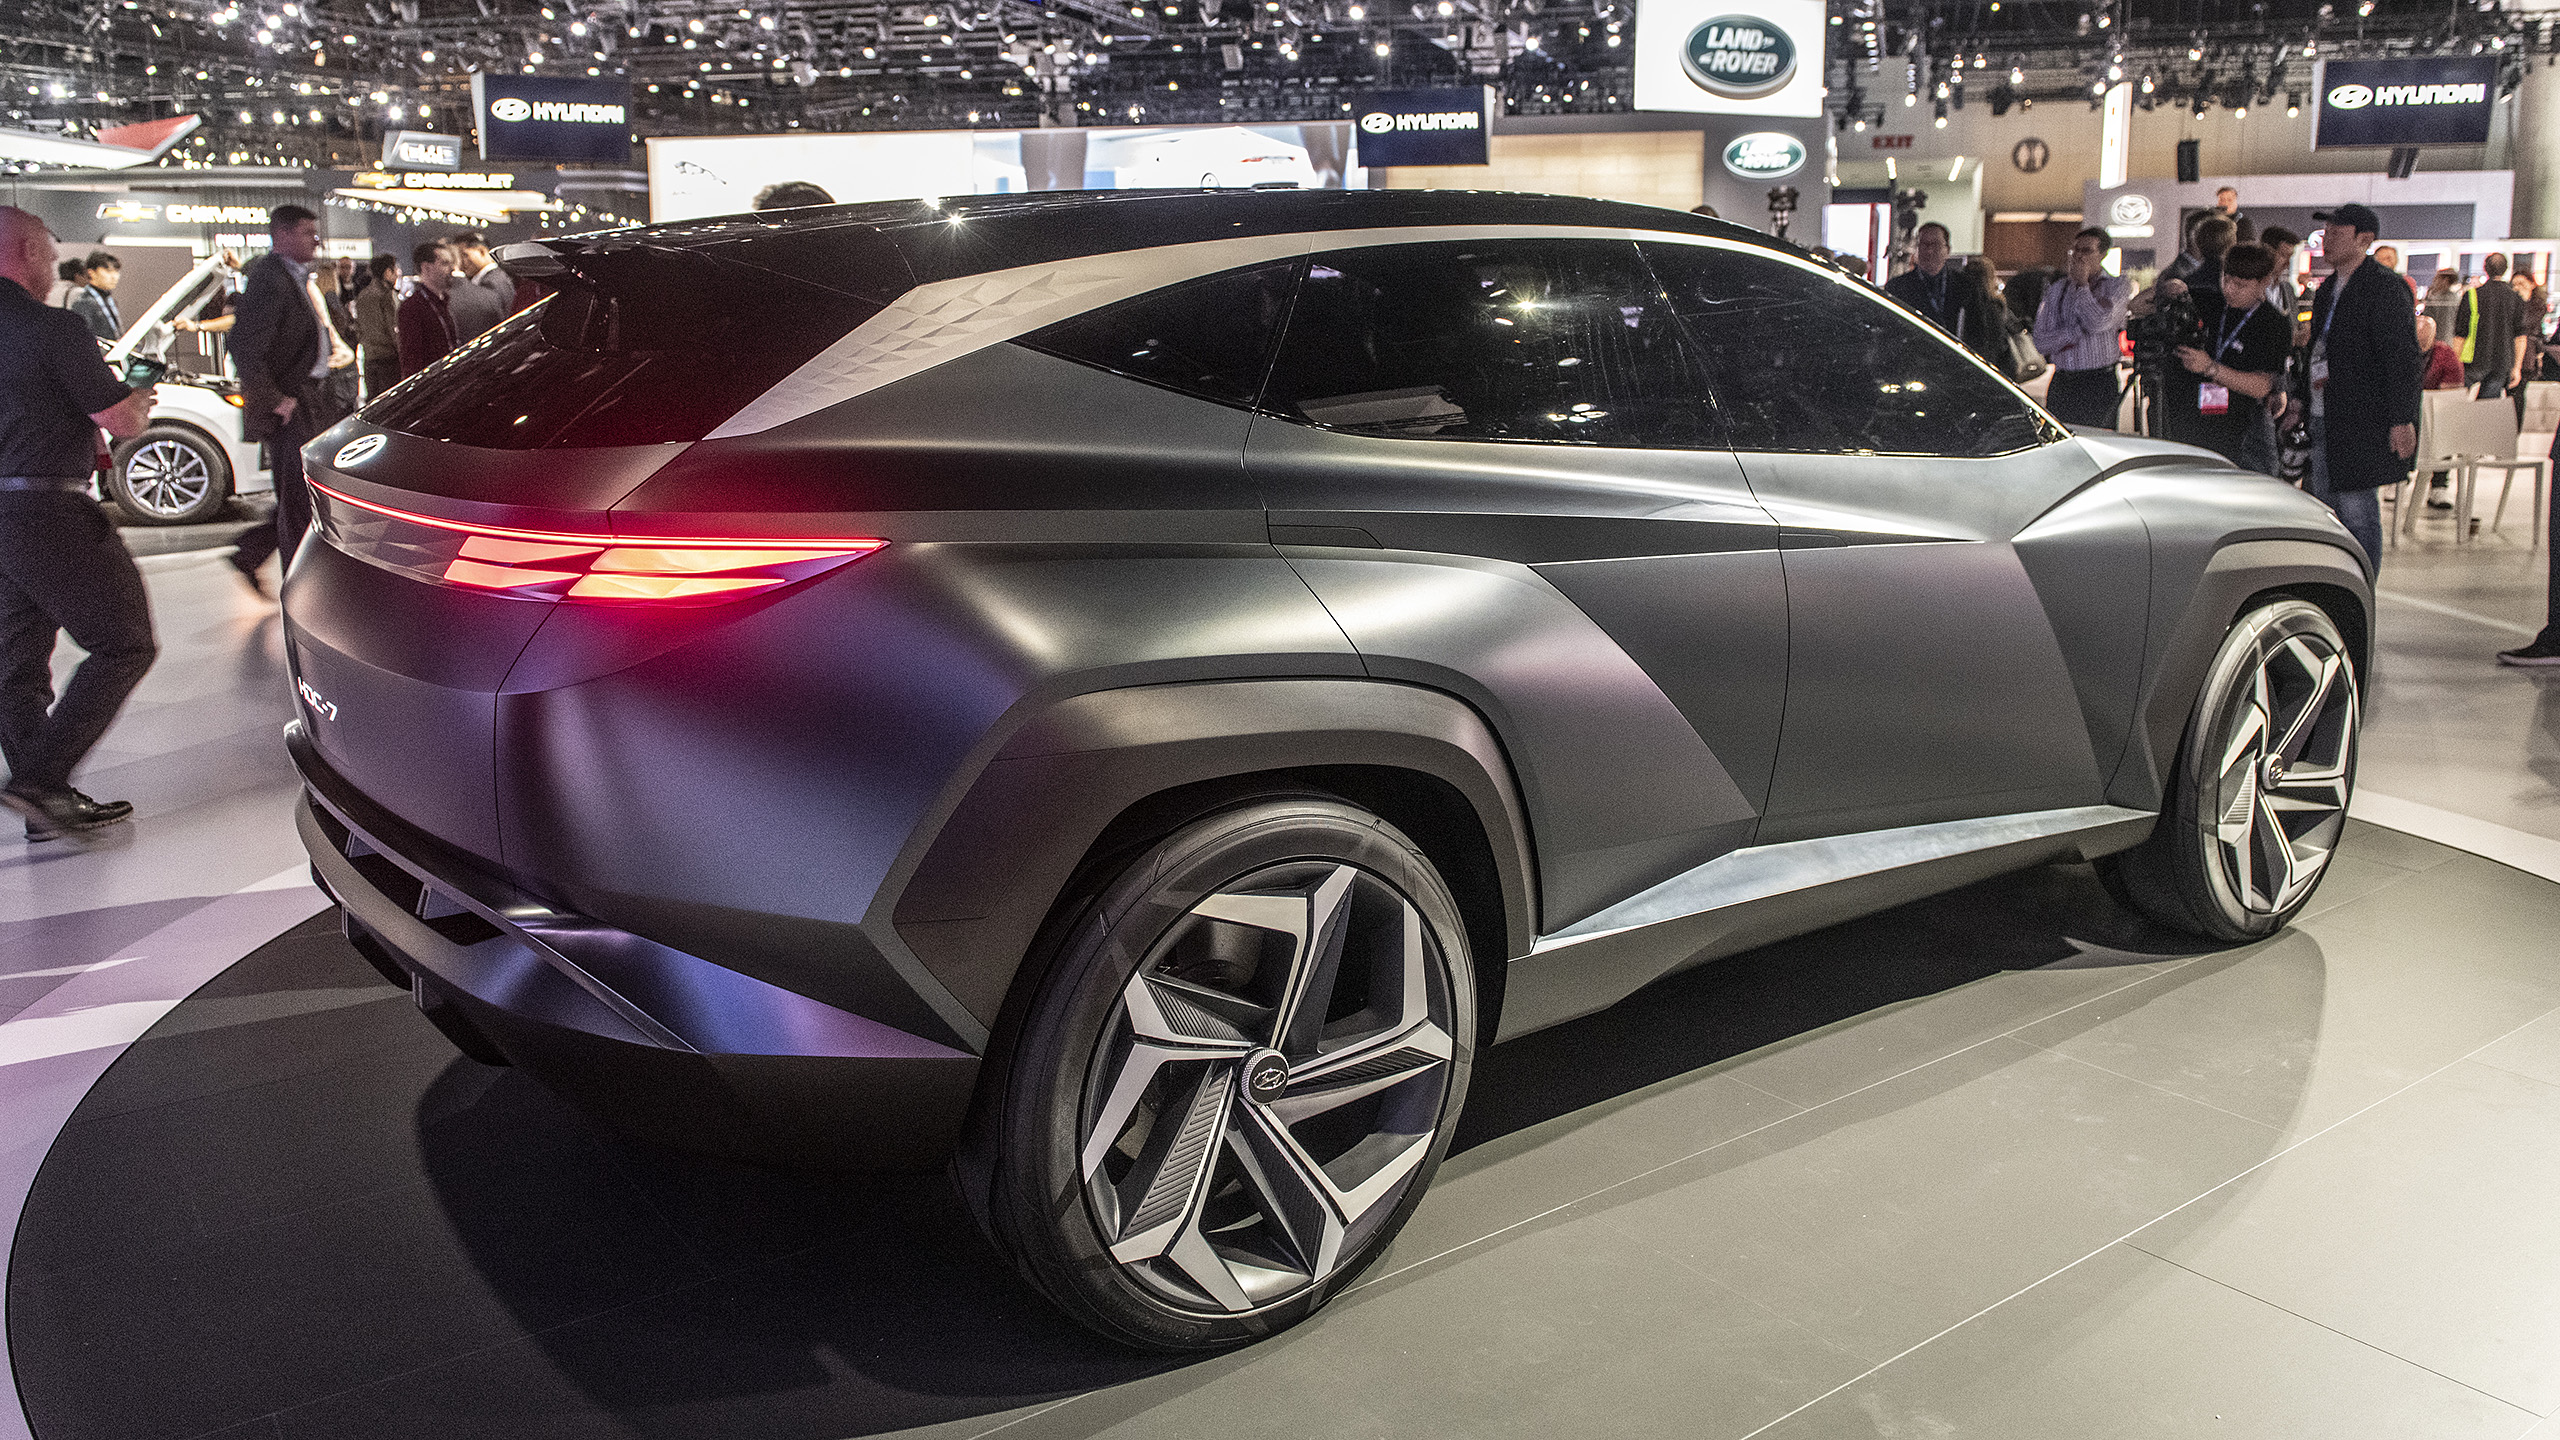 Hyundai Vision T Plugin Hybrid SUV Concept debuts at L.A. Auto Show